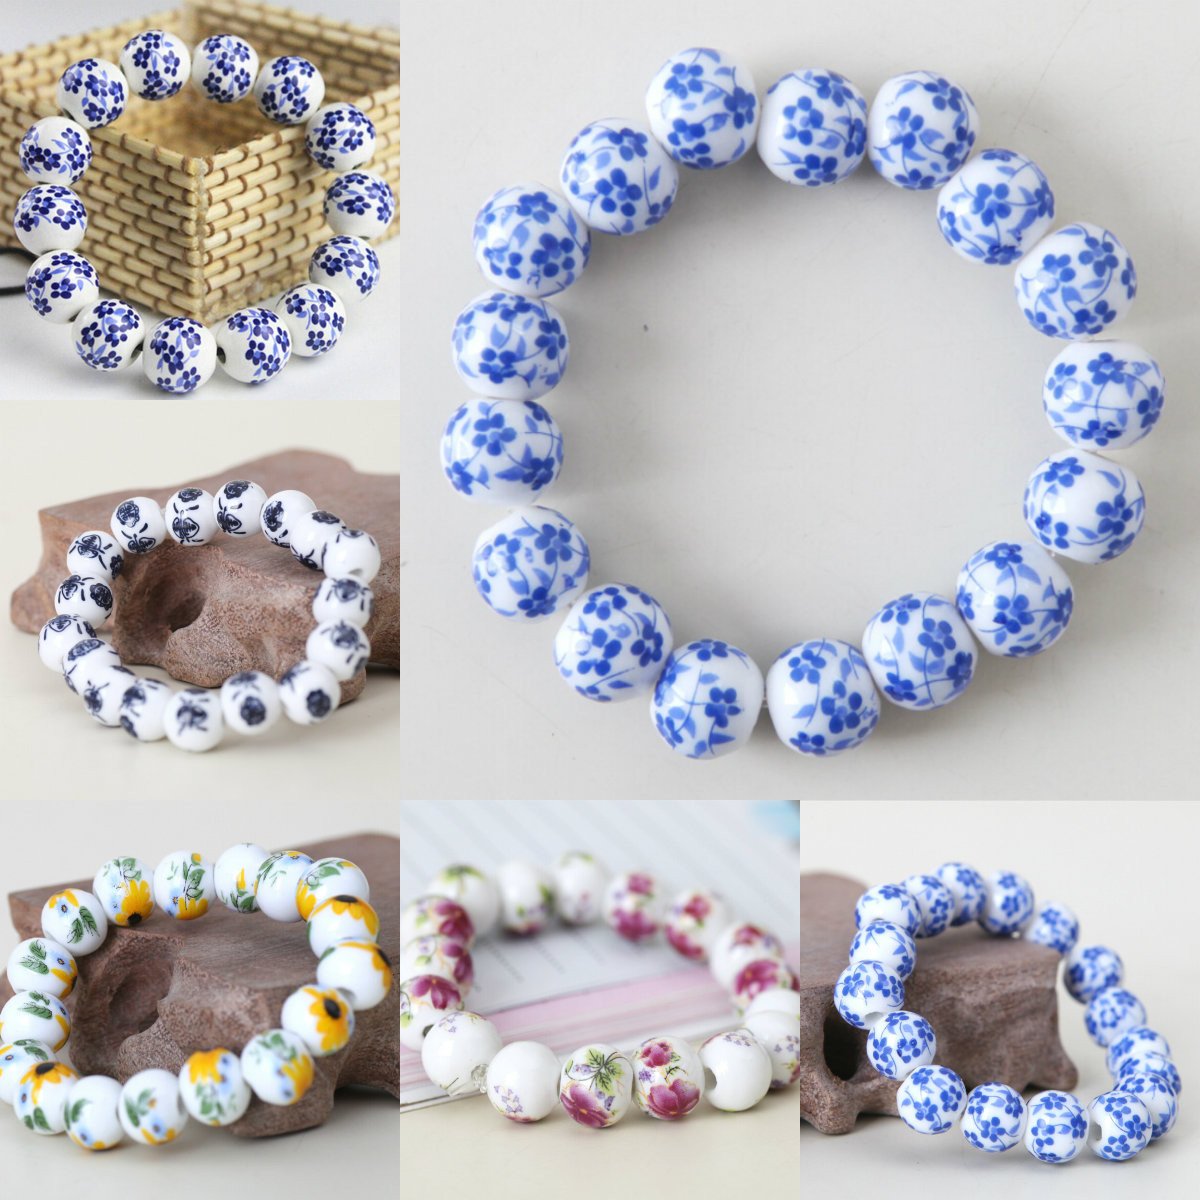 Jingdezhen Porcelain Beads Bracelet - Floral Fawna